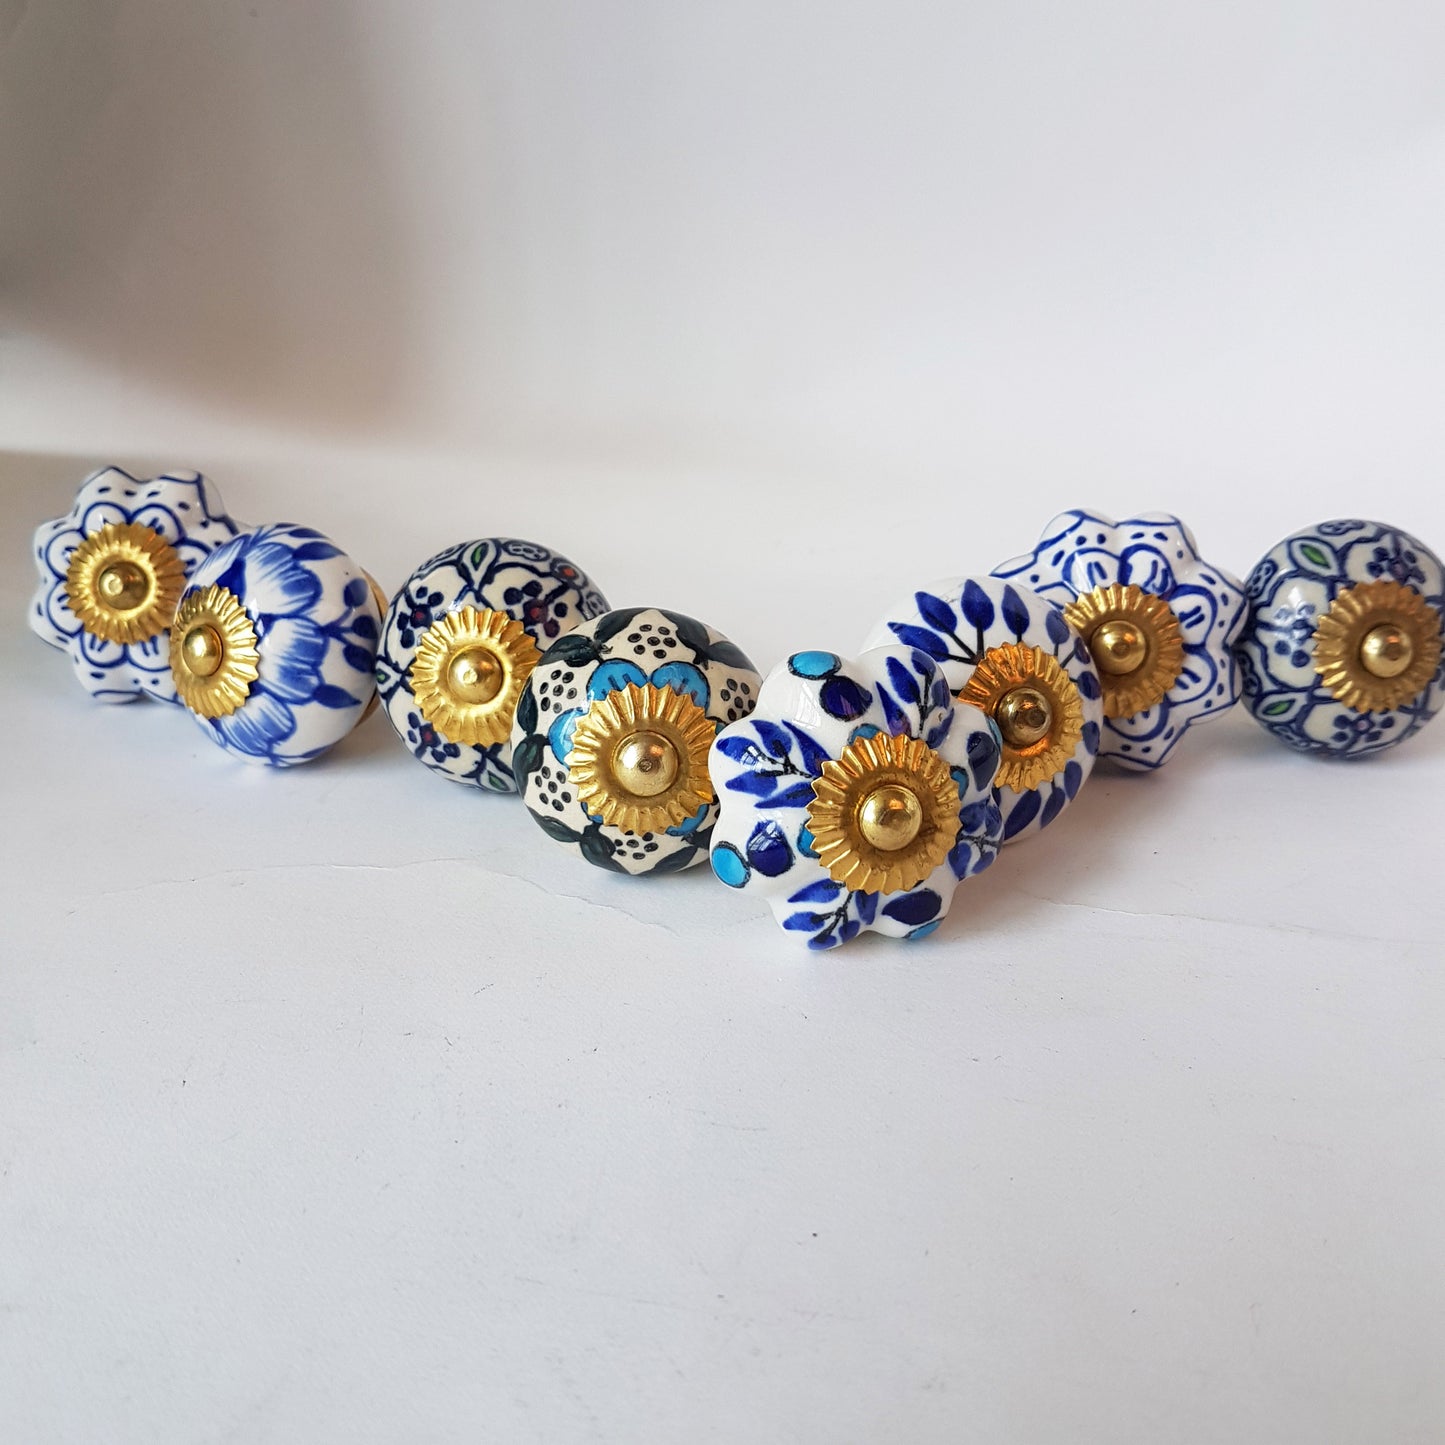 Delphine set of 8 cabinet knob drawer pulls. Designer collection in classic Delft Dutch blue & white floral patterns.  Easy DIY decor fix!